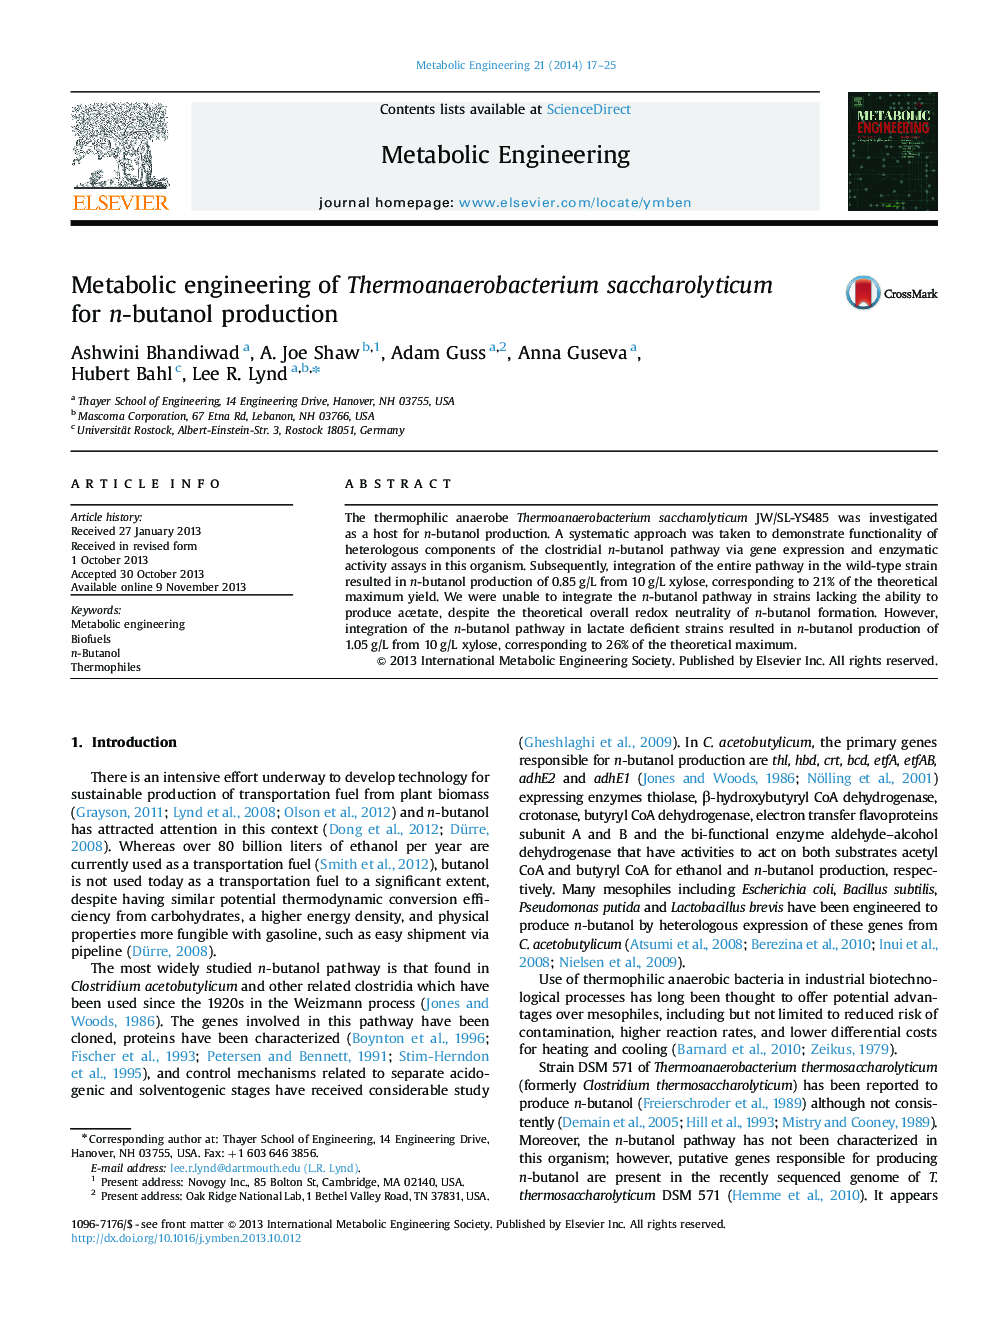 Metabolic engineering of Thermoanaerobacterium saccharolyticum for n-butanol production